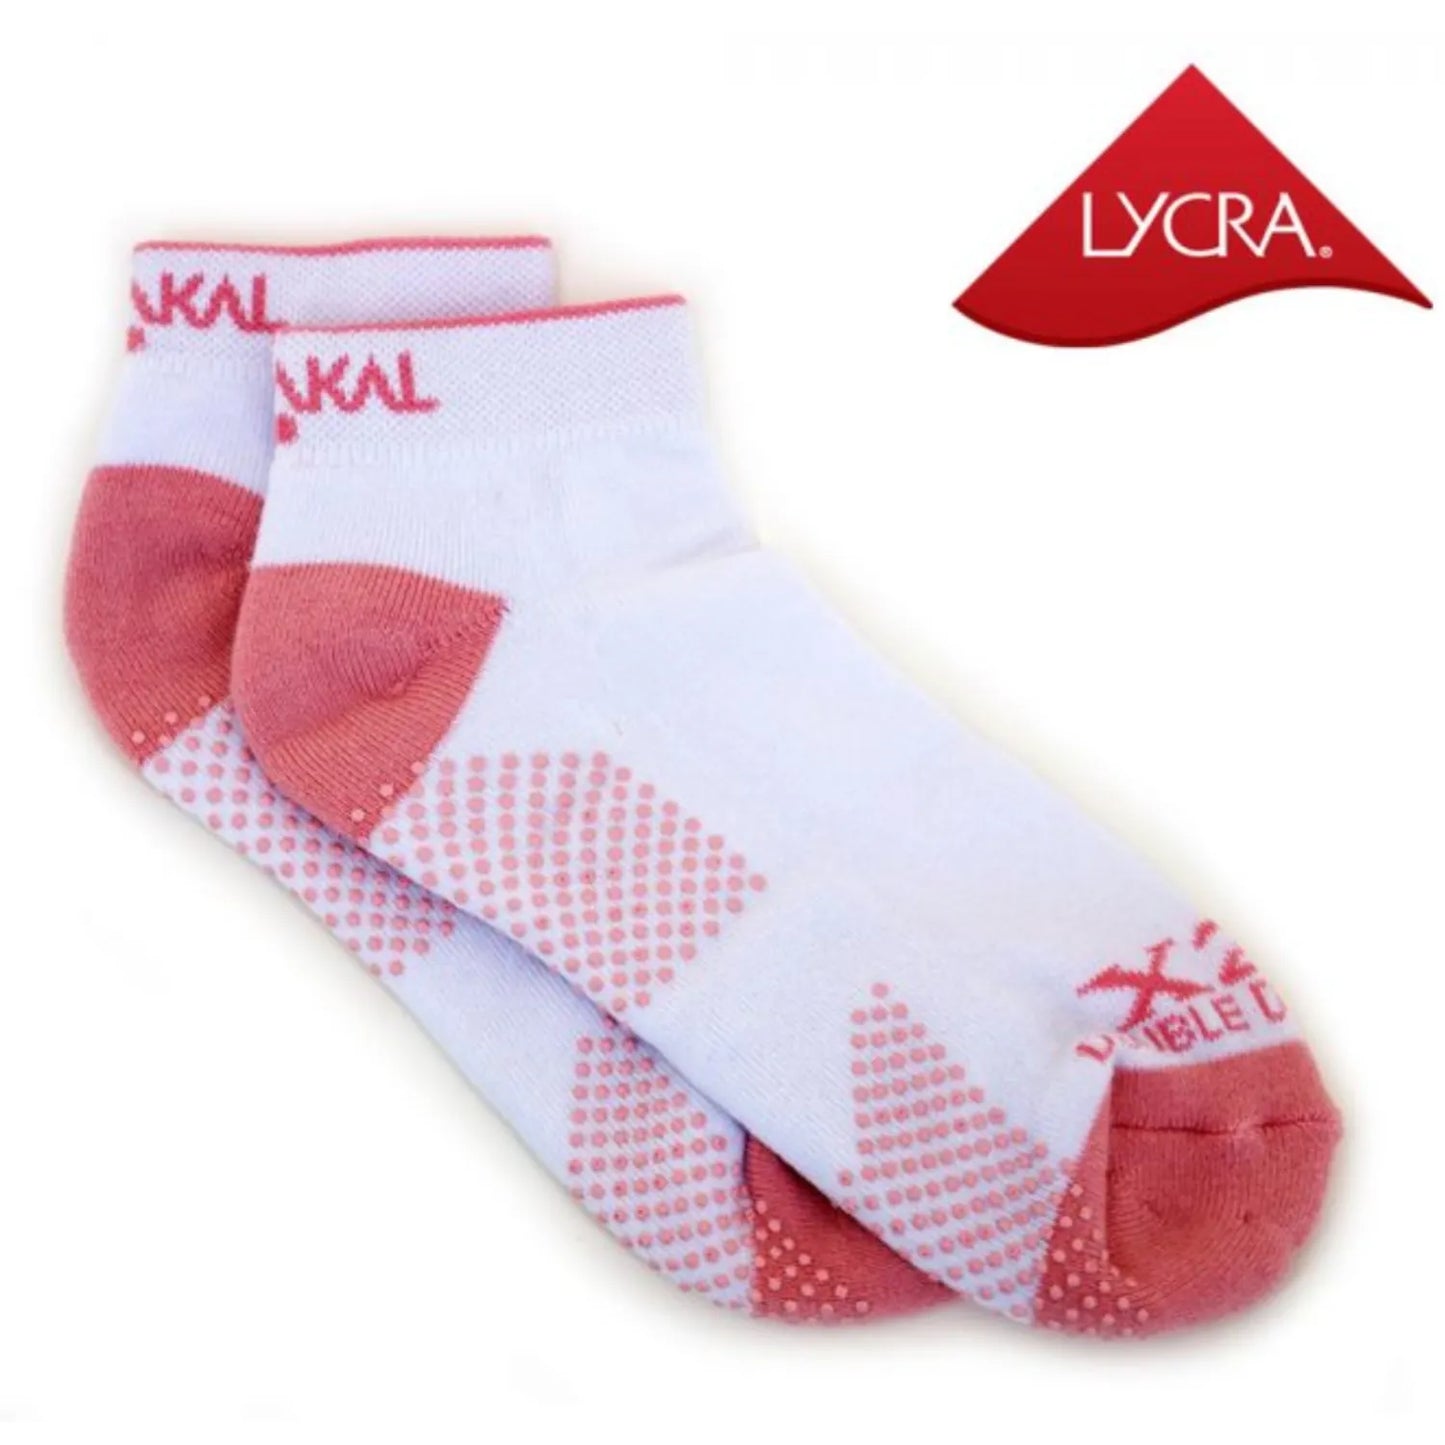 Karakal X2+ Ladies Technical Socks